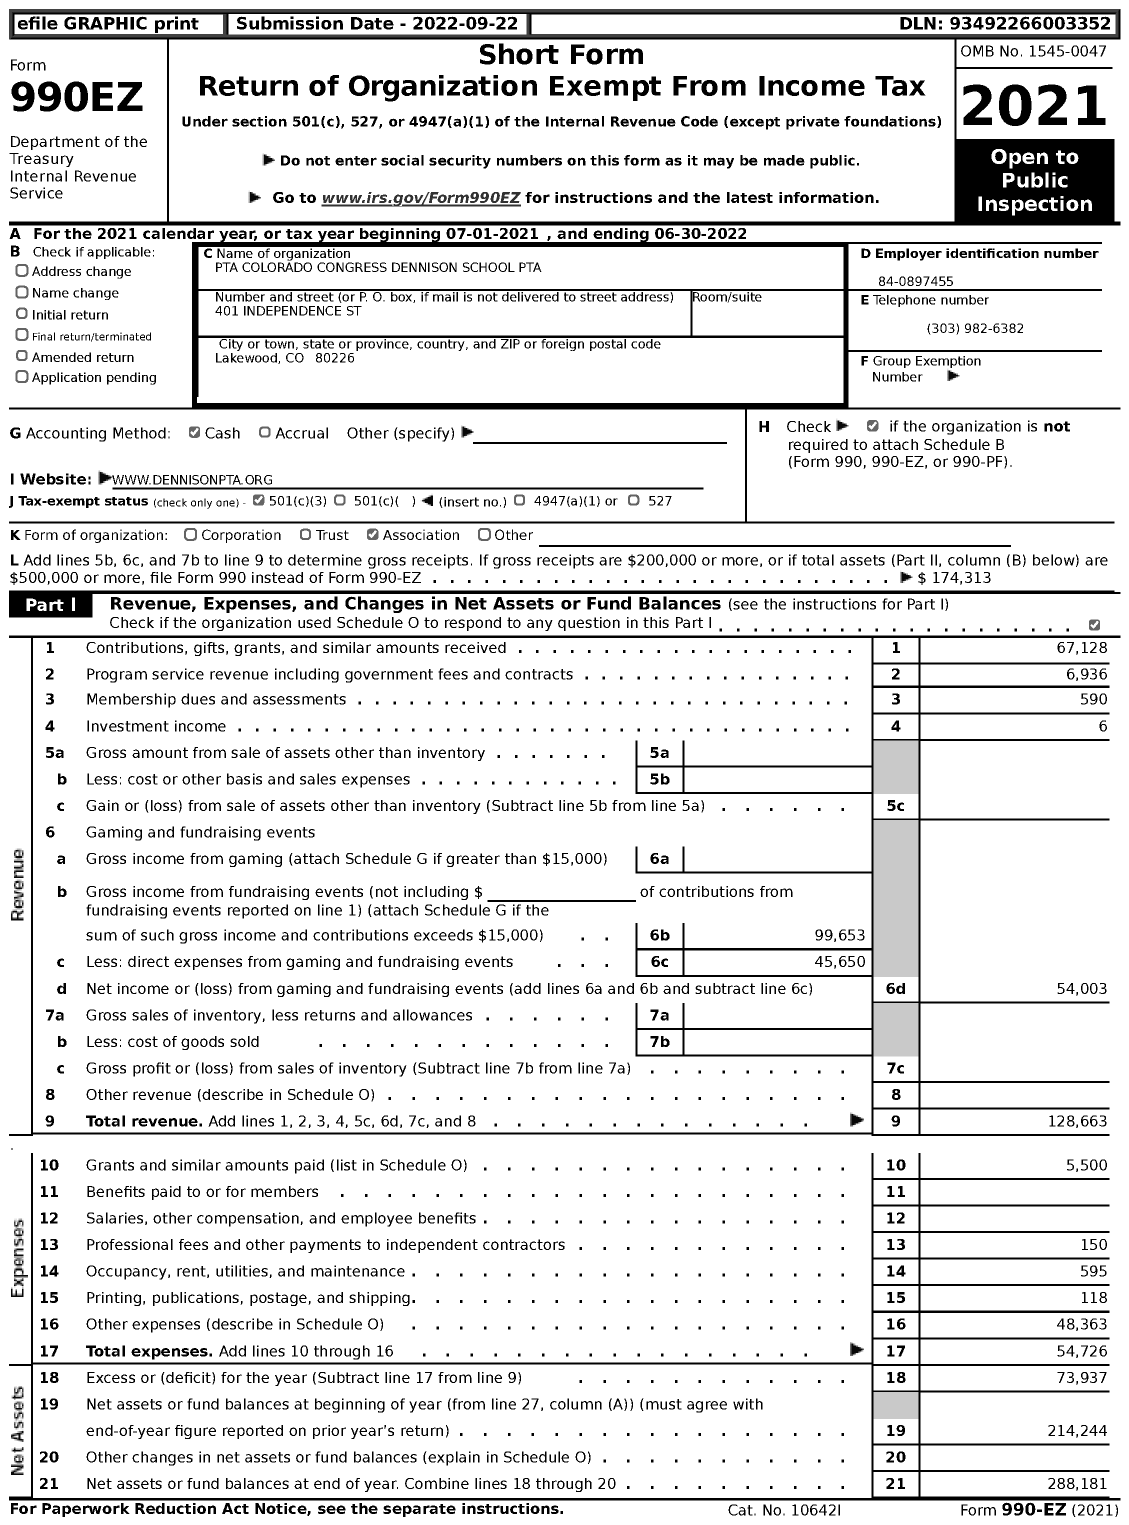 Image of first page of 2021 Form 990EZ for PTA Colorado Congress Dennison School PTA